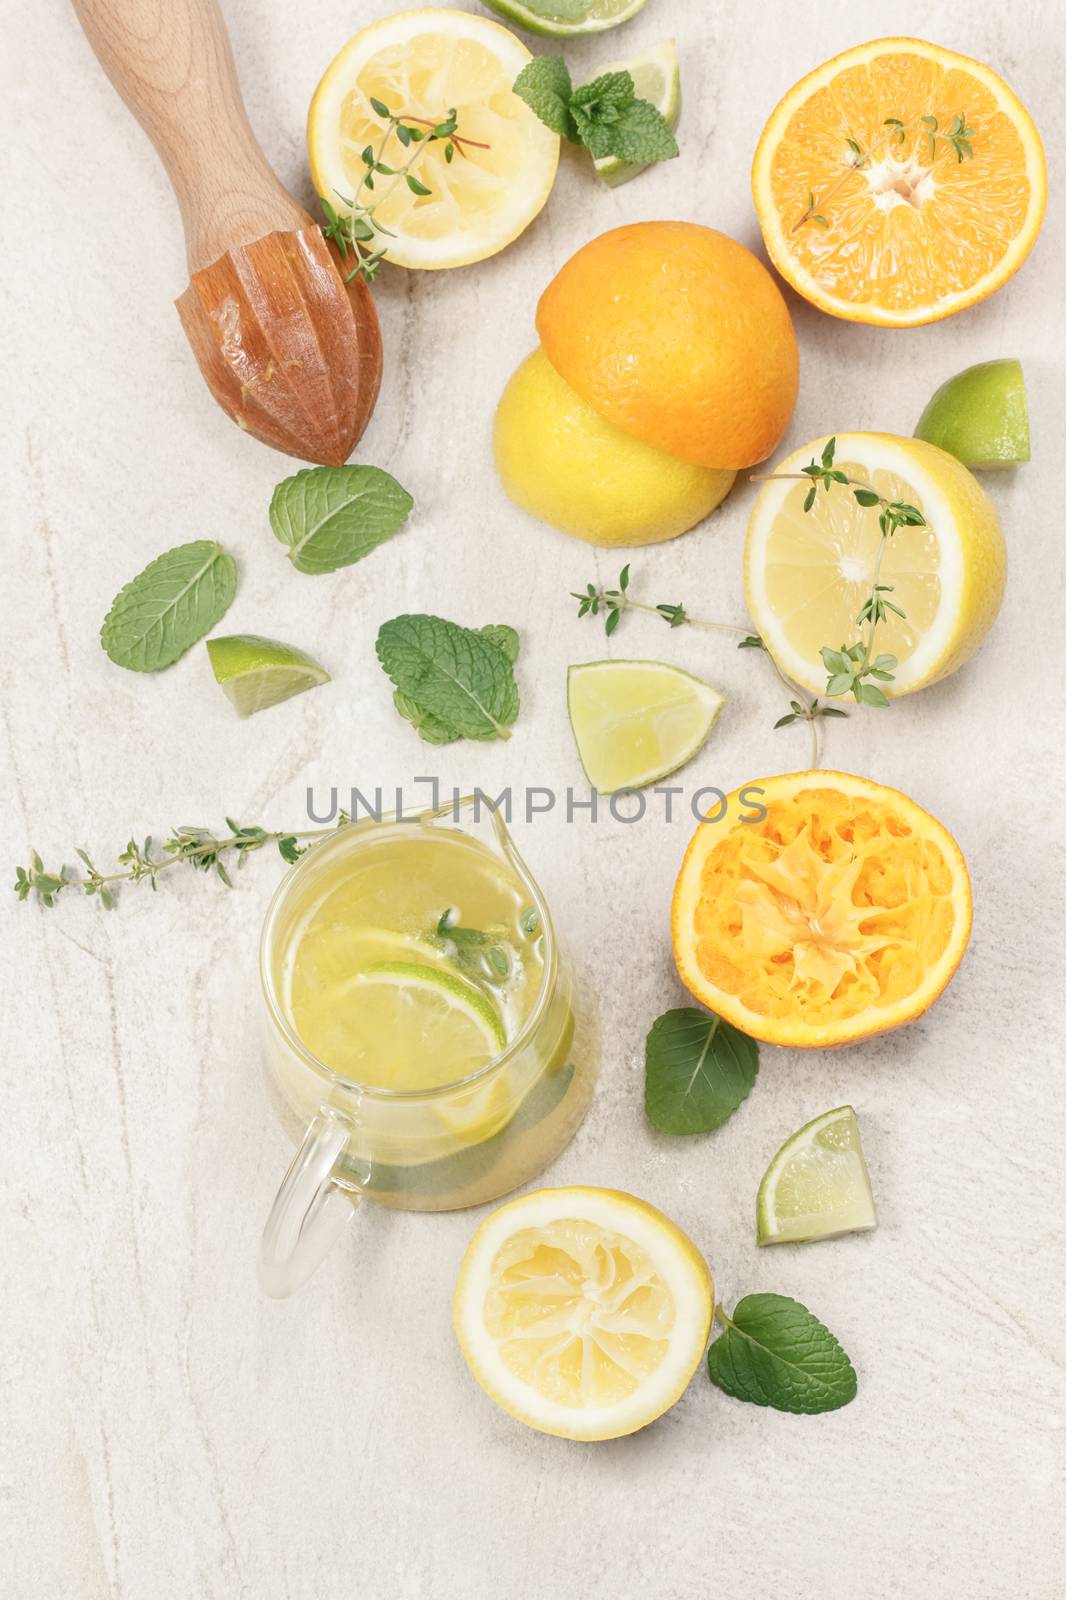 Preparing homemade lemonade by Slast20